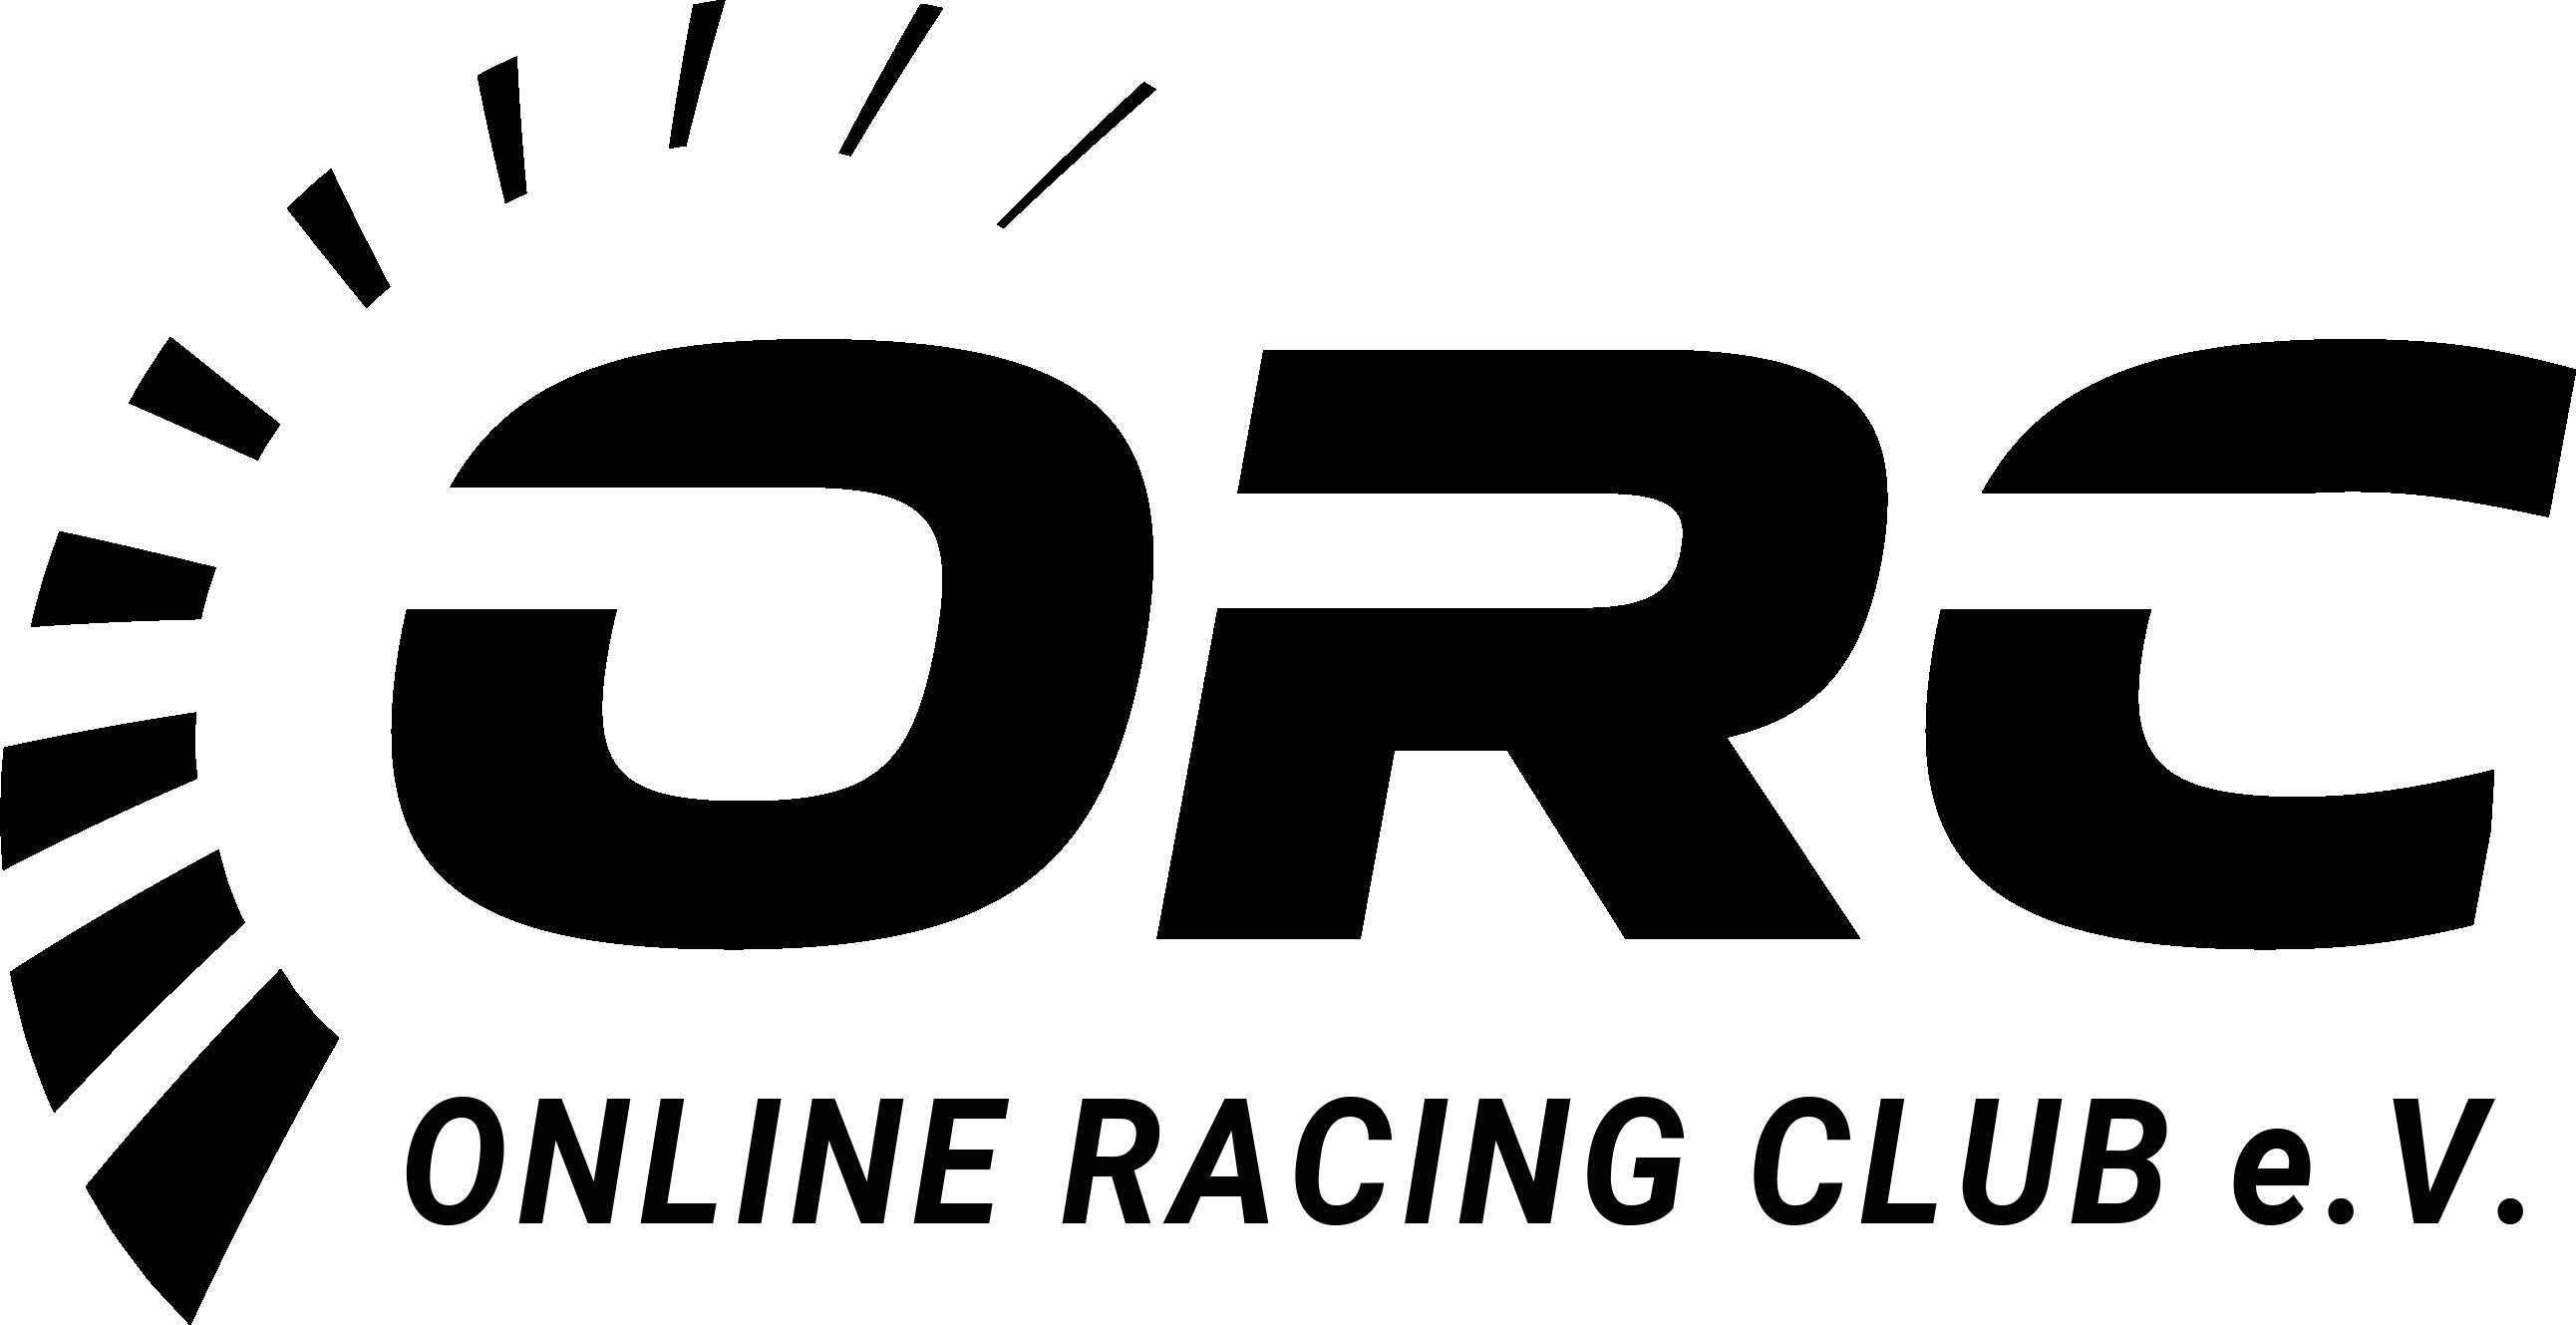 f1 2014, f1 2021, f1 2020, online racing, online liga, online racing club, Verein, e.V.